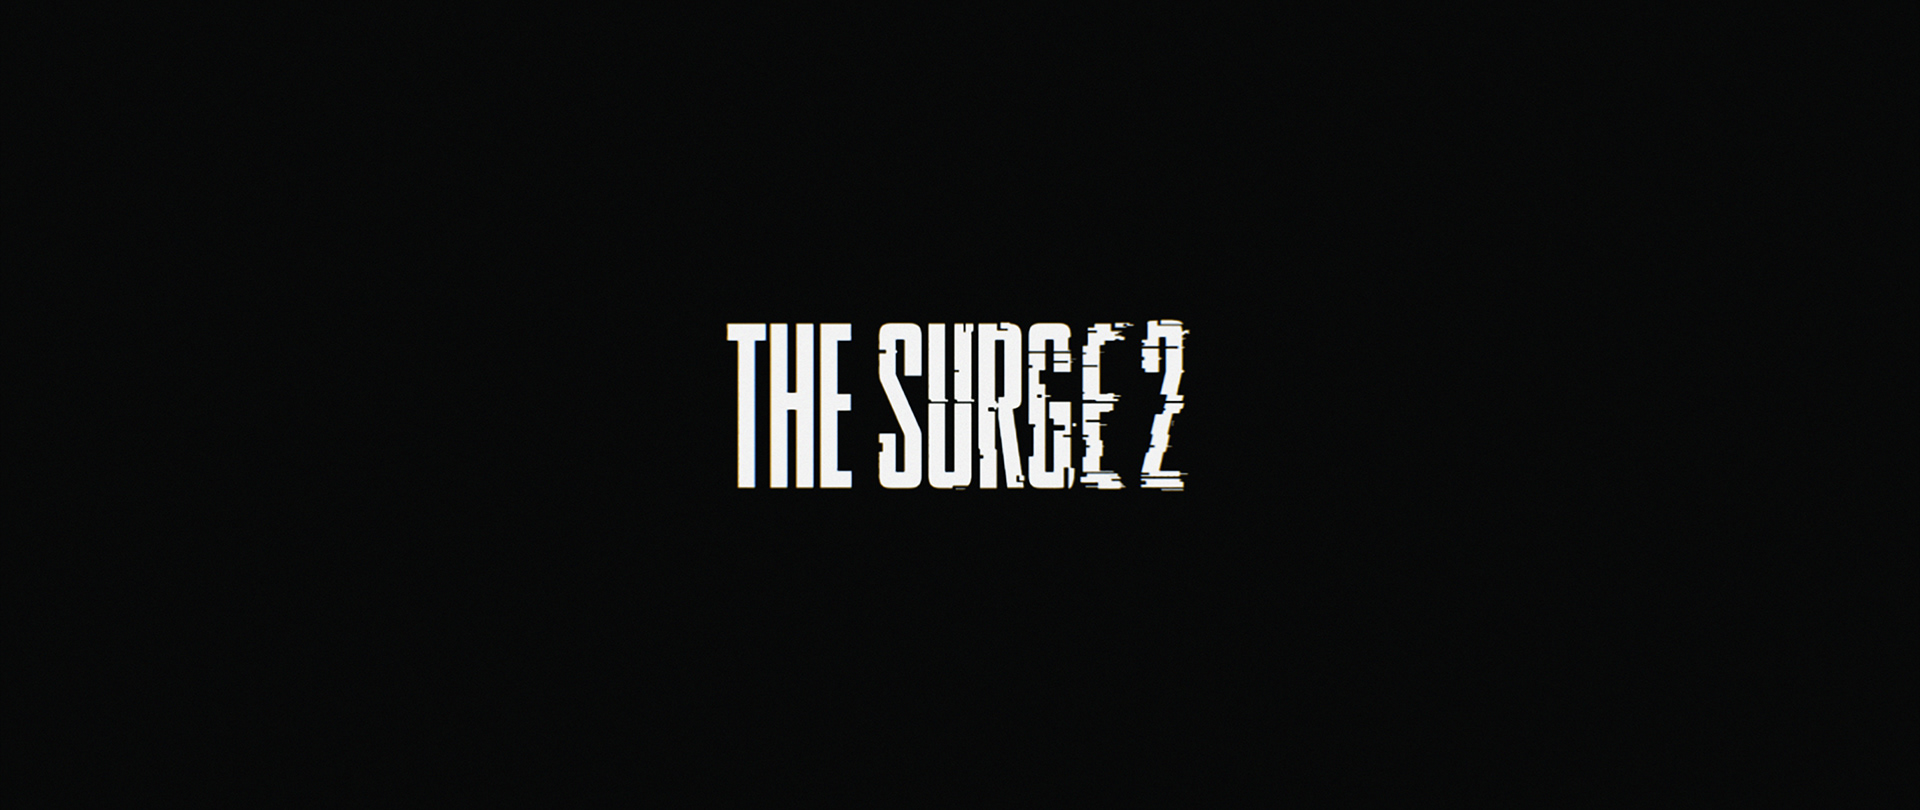 The Surge 2 Motion Cinematic Trailer on Behancec9a6dd91422181.5e31775ee91f4.jpg